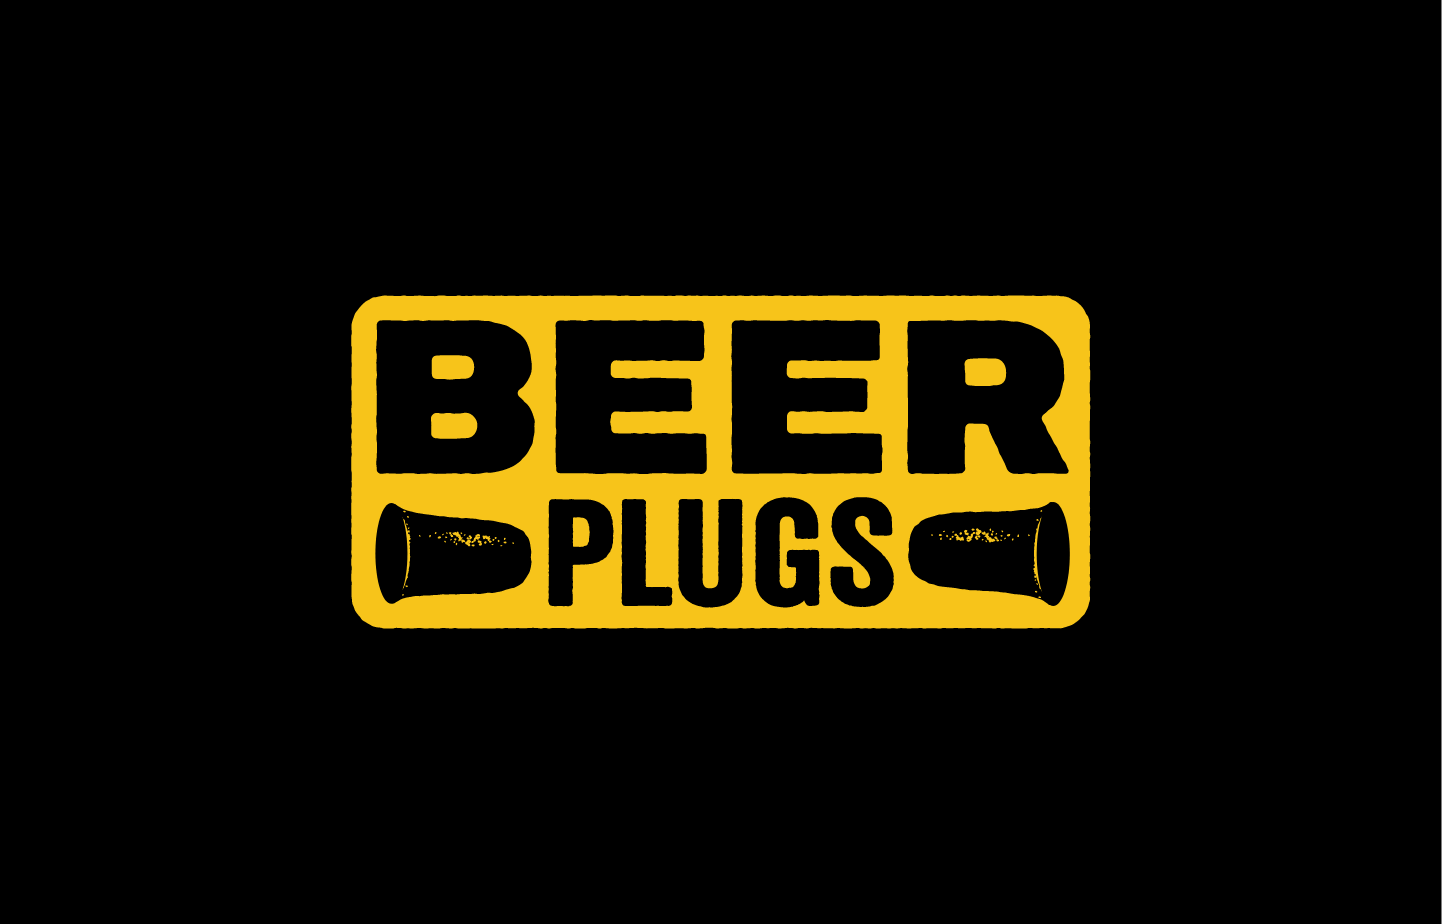 Beer Plugs Logo option 2